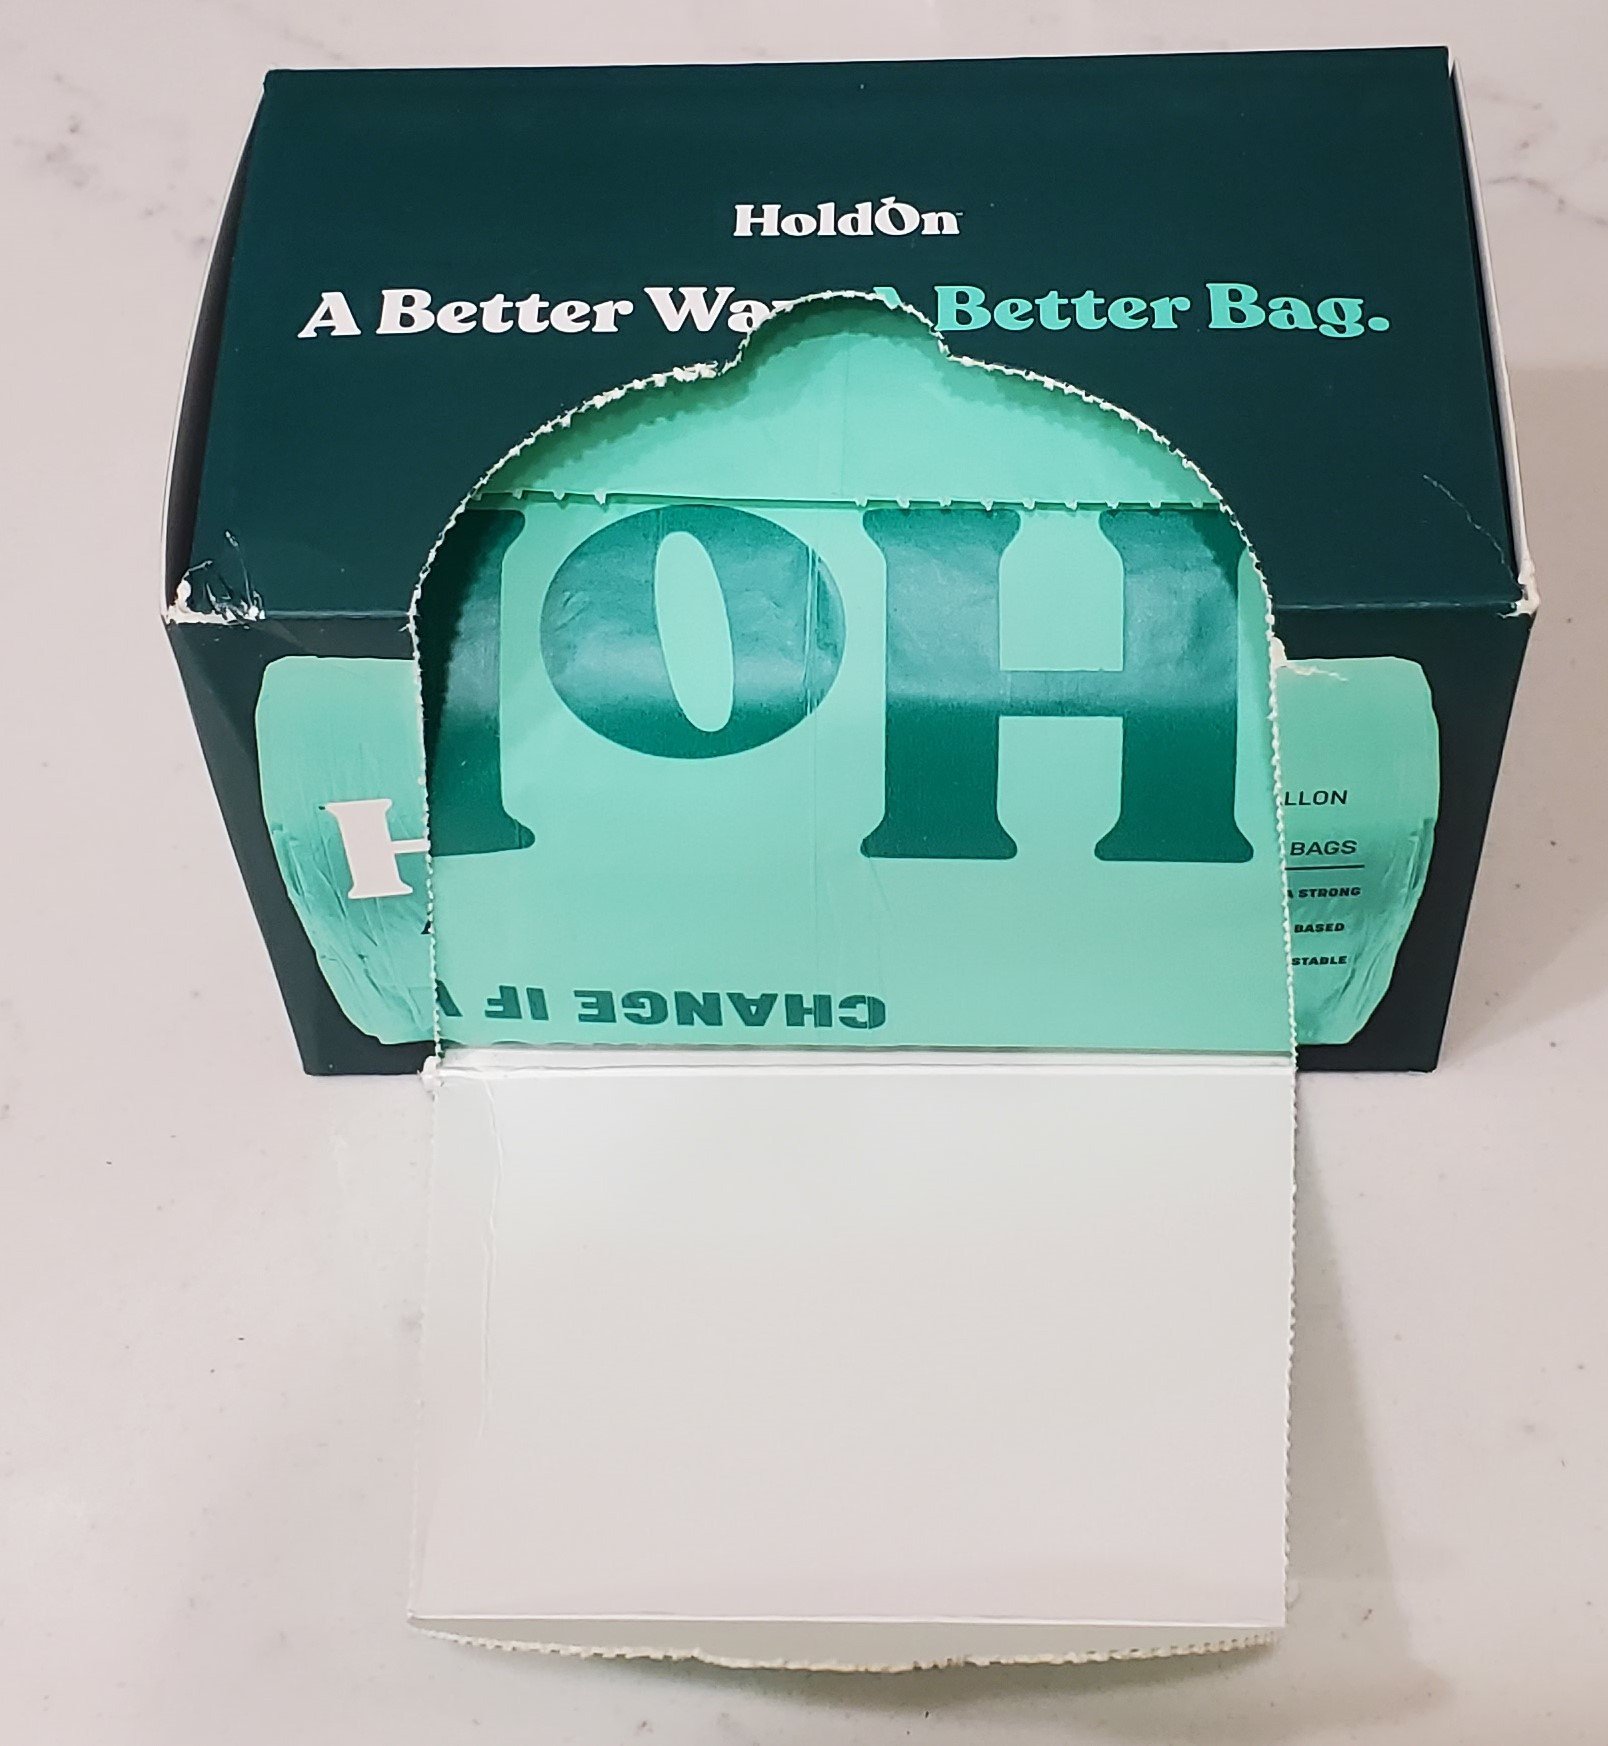 HoldOn Bag Review - Compostable Trash + Zip Bags